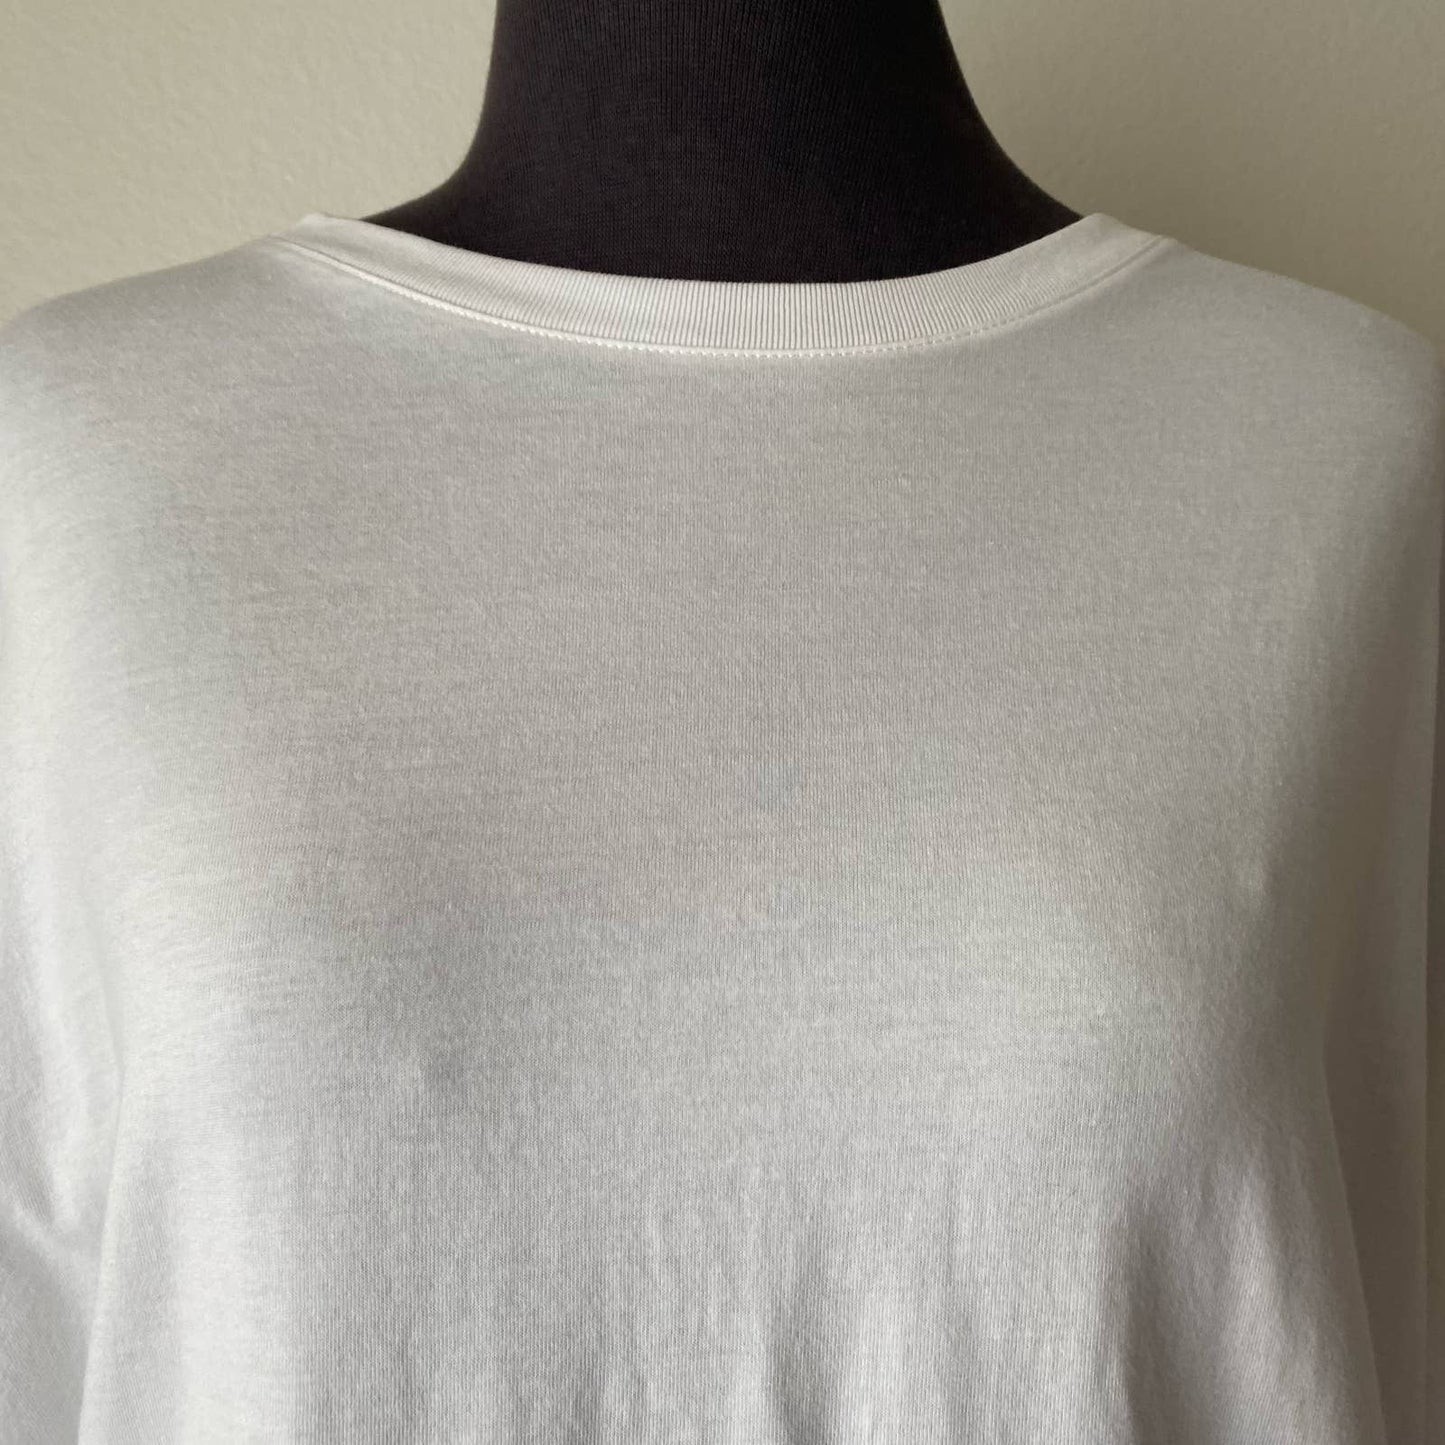 Uniqlo sz XS 3/4 sleeve batwing 100% cotton top shirt NWOT